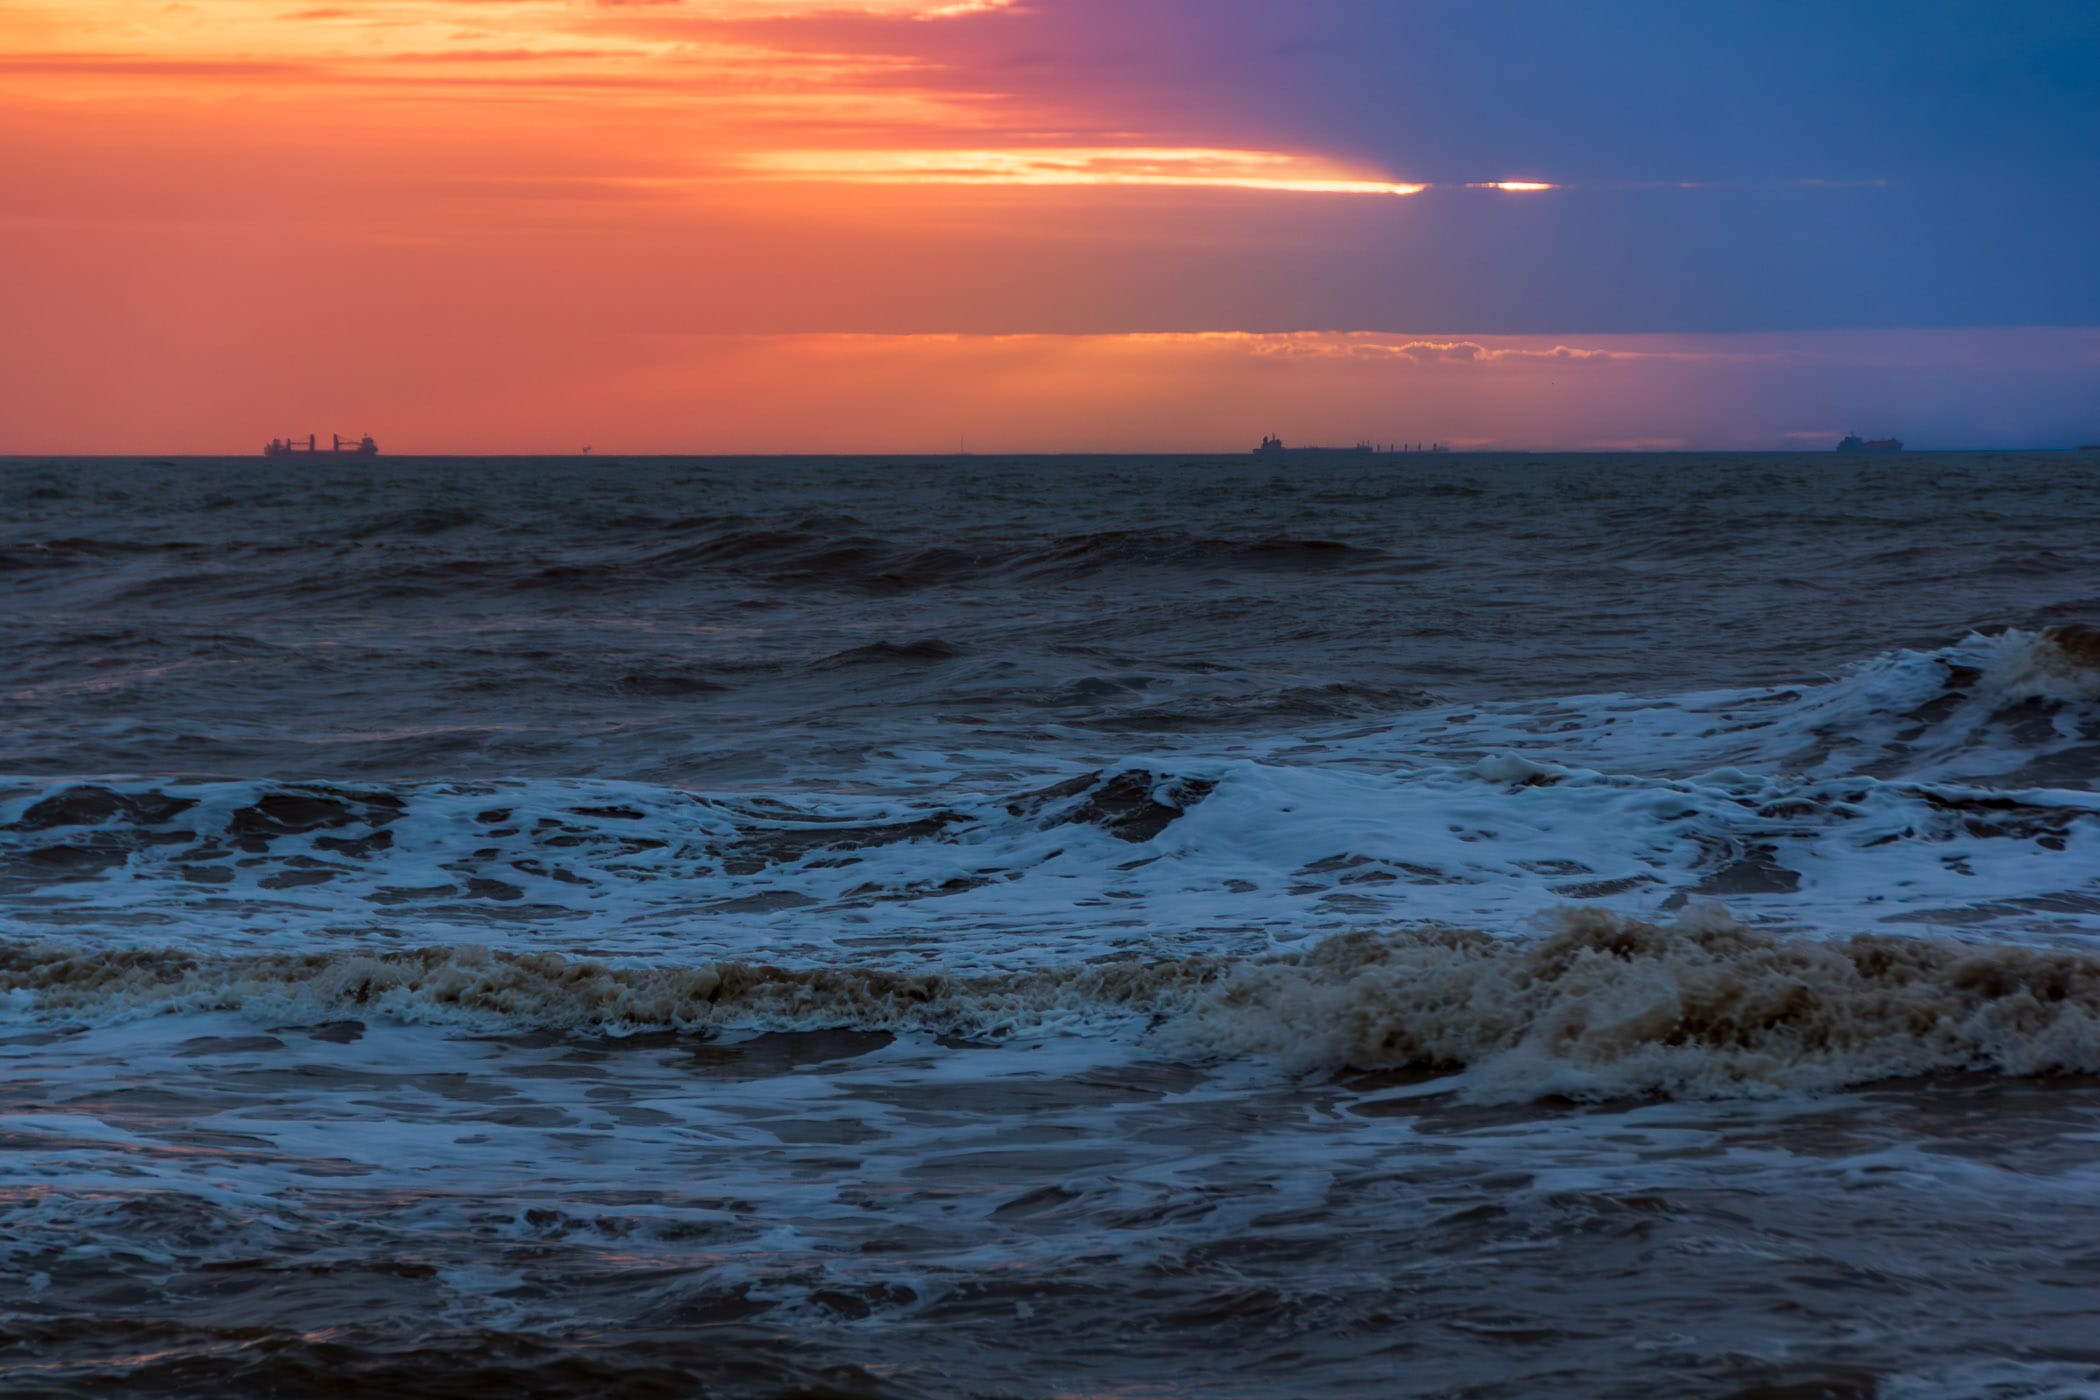 Ships off the shore of Galveston, Texas as the sun rises over the Gulf of Mexico.